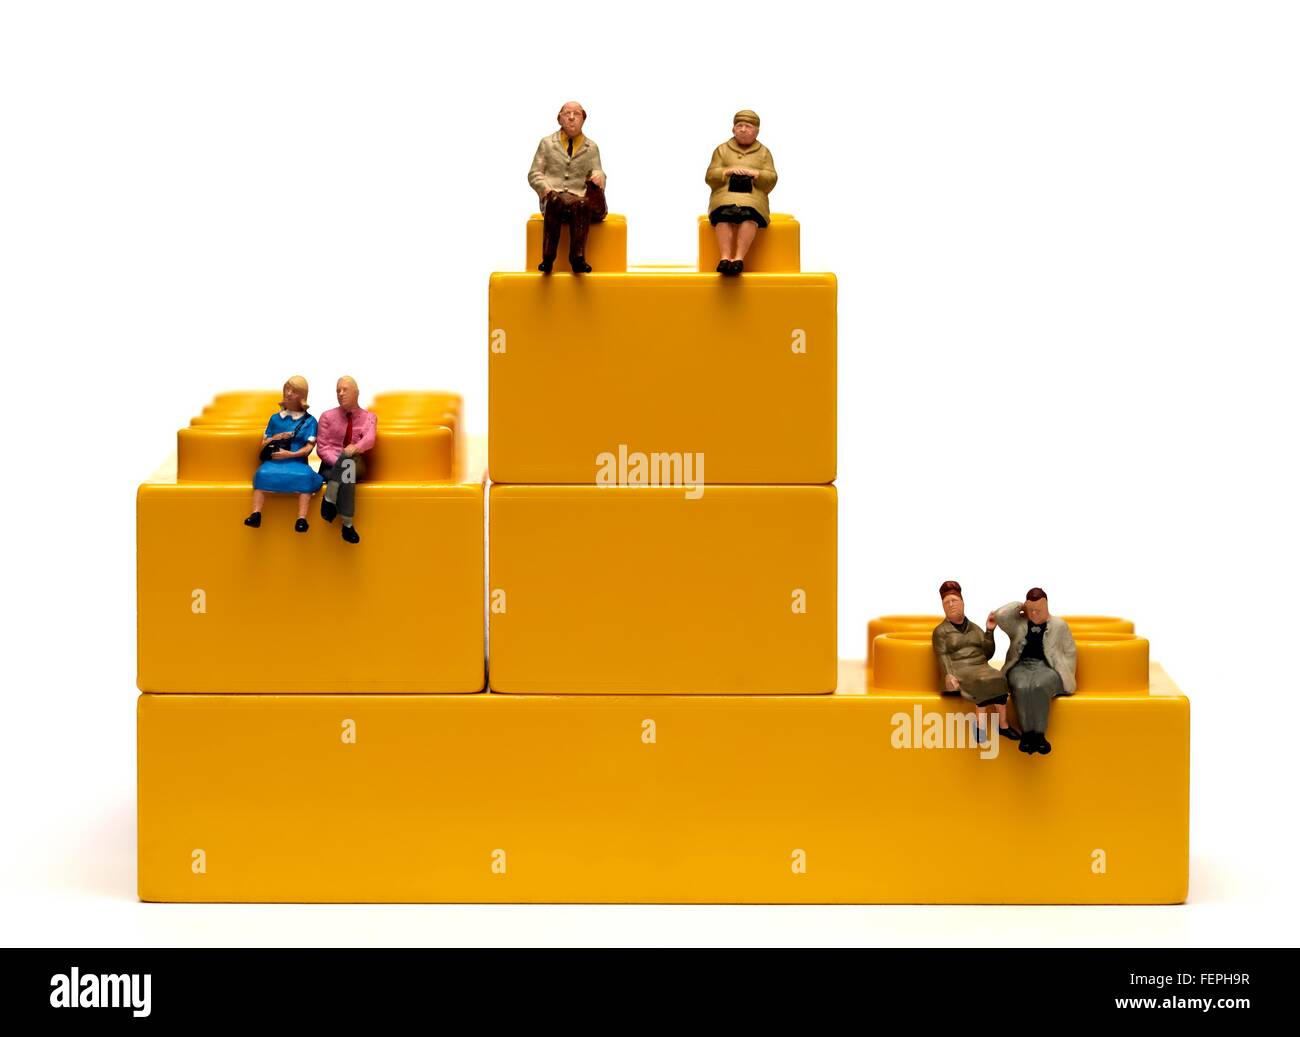 3 miniature figurine couples sitting on interlocking yellow plastic bricks 1st 2nd third pension concept Stock Photo